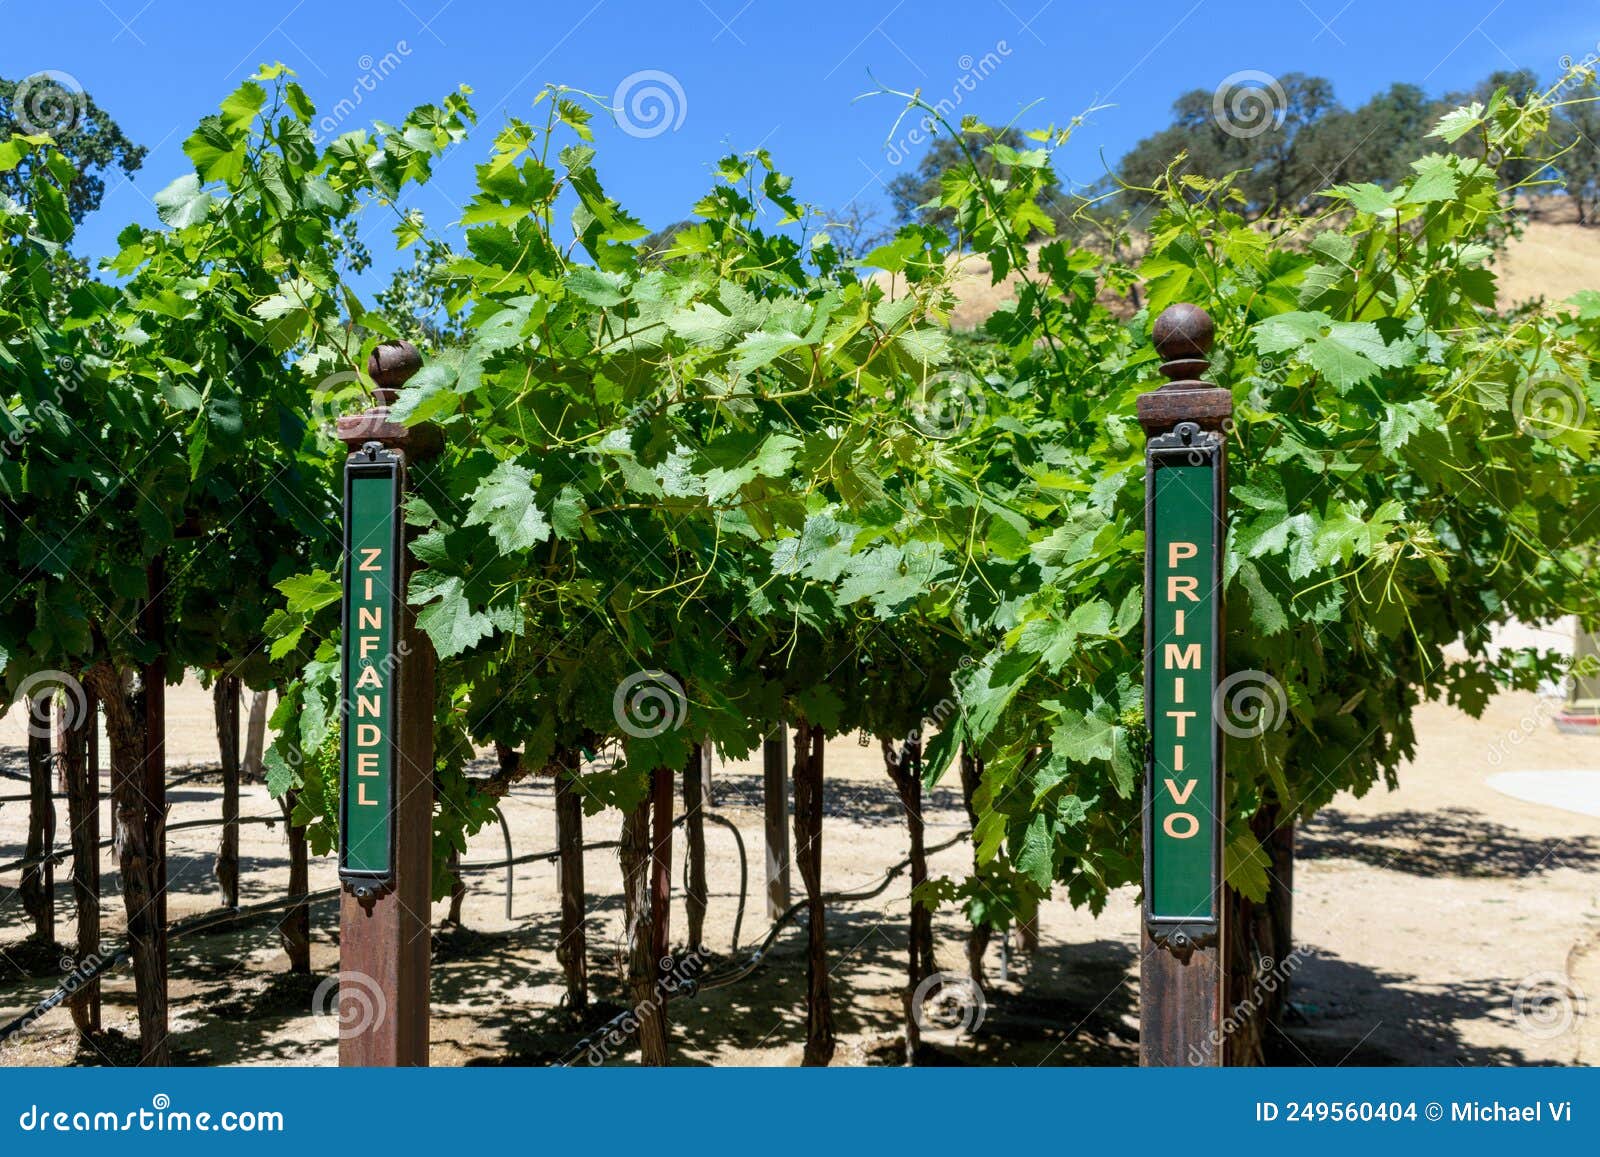 zinfandel and primitivo red wine grape variety outdoor signs on metal vertical end post in summer vineyard